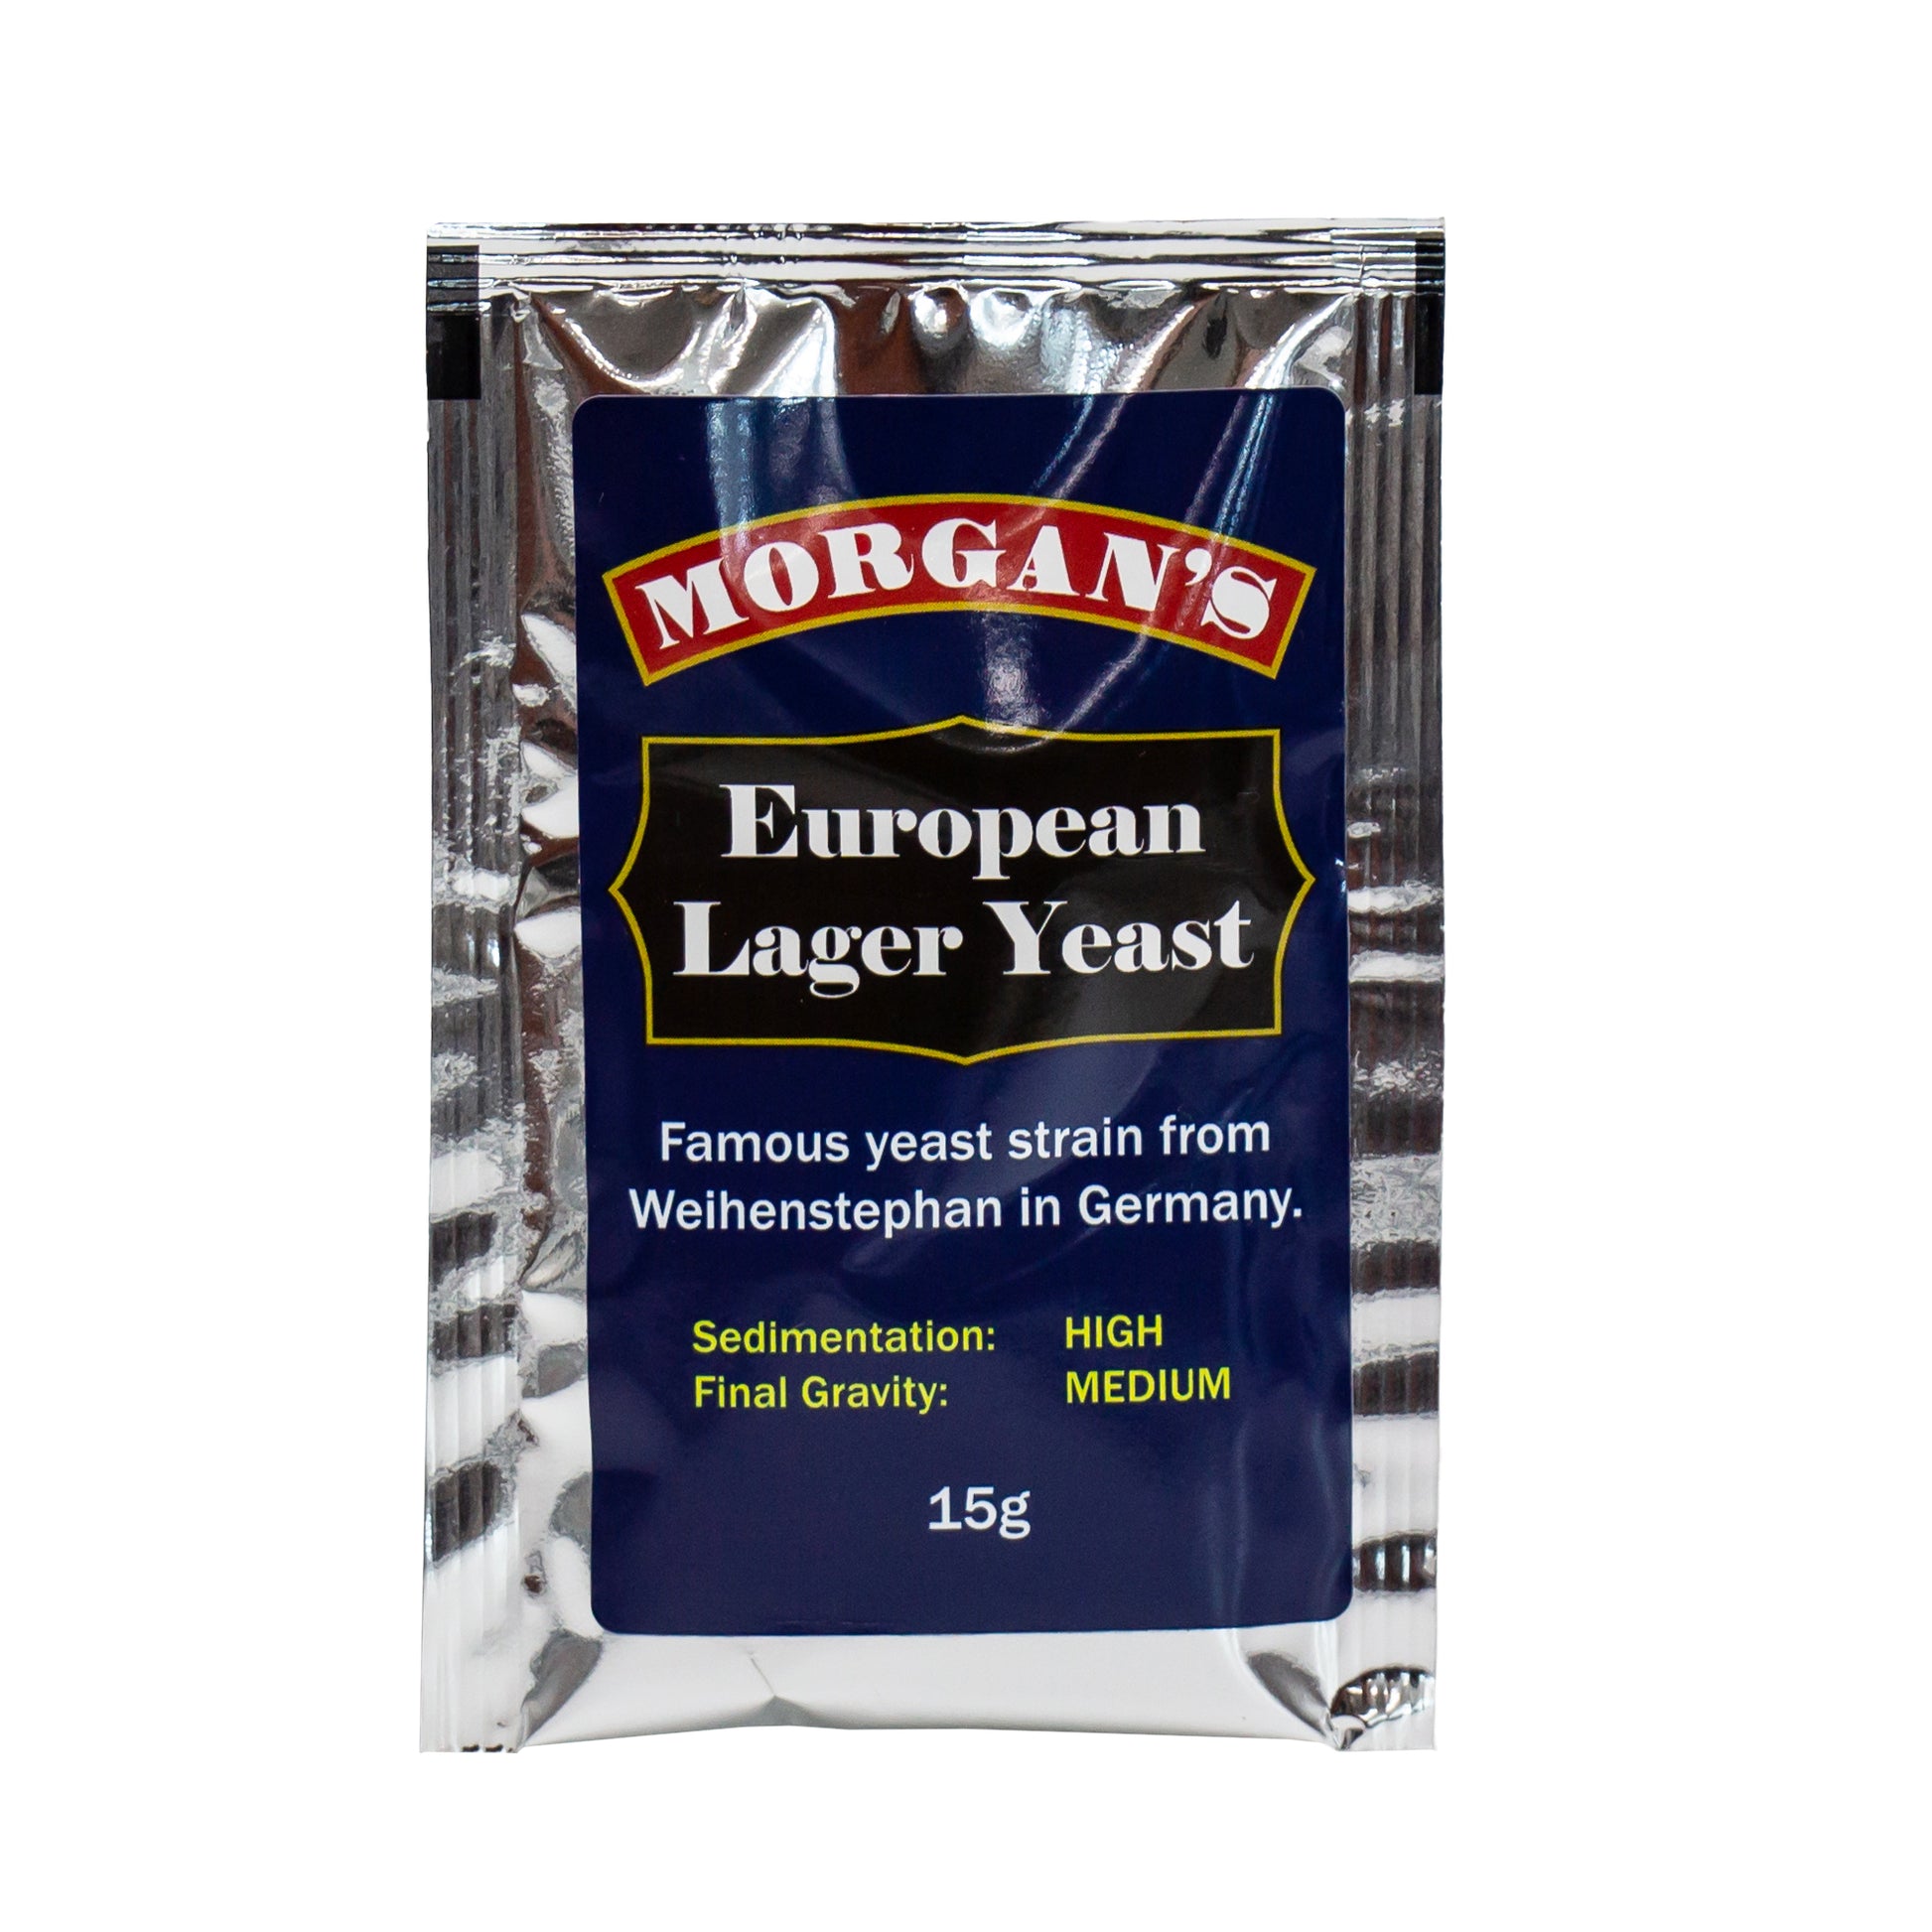 15g packet of Morgans brew cellar European larger yeast